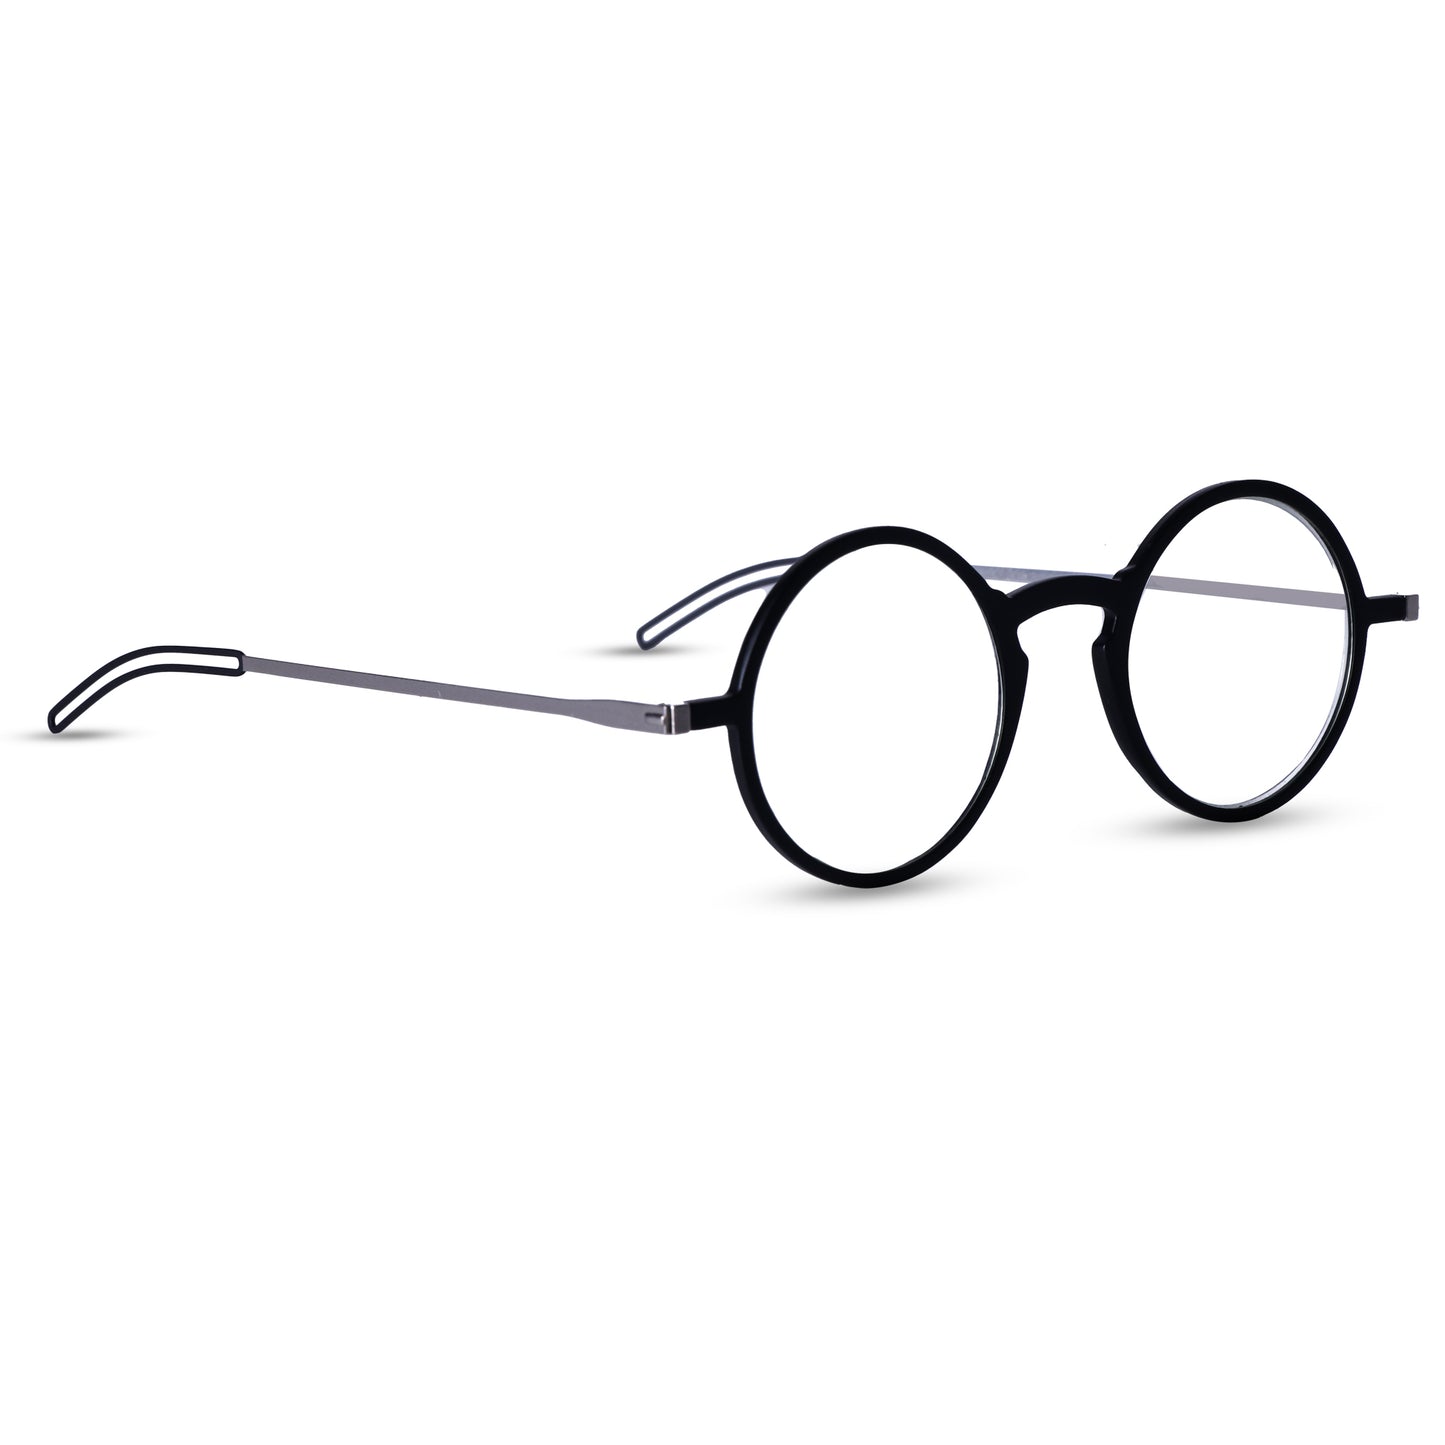 Sirts Thin Black Round Reading Glasses +1.50